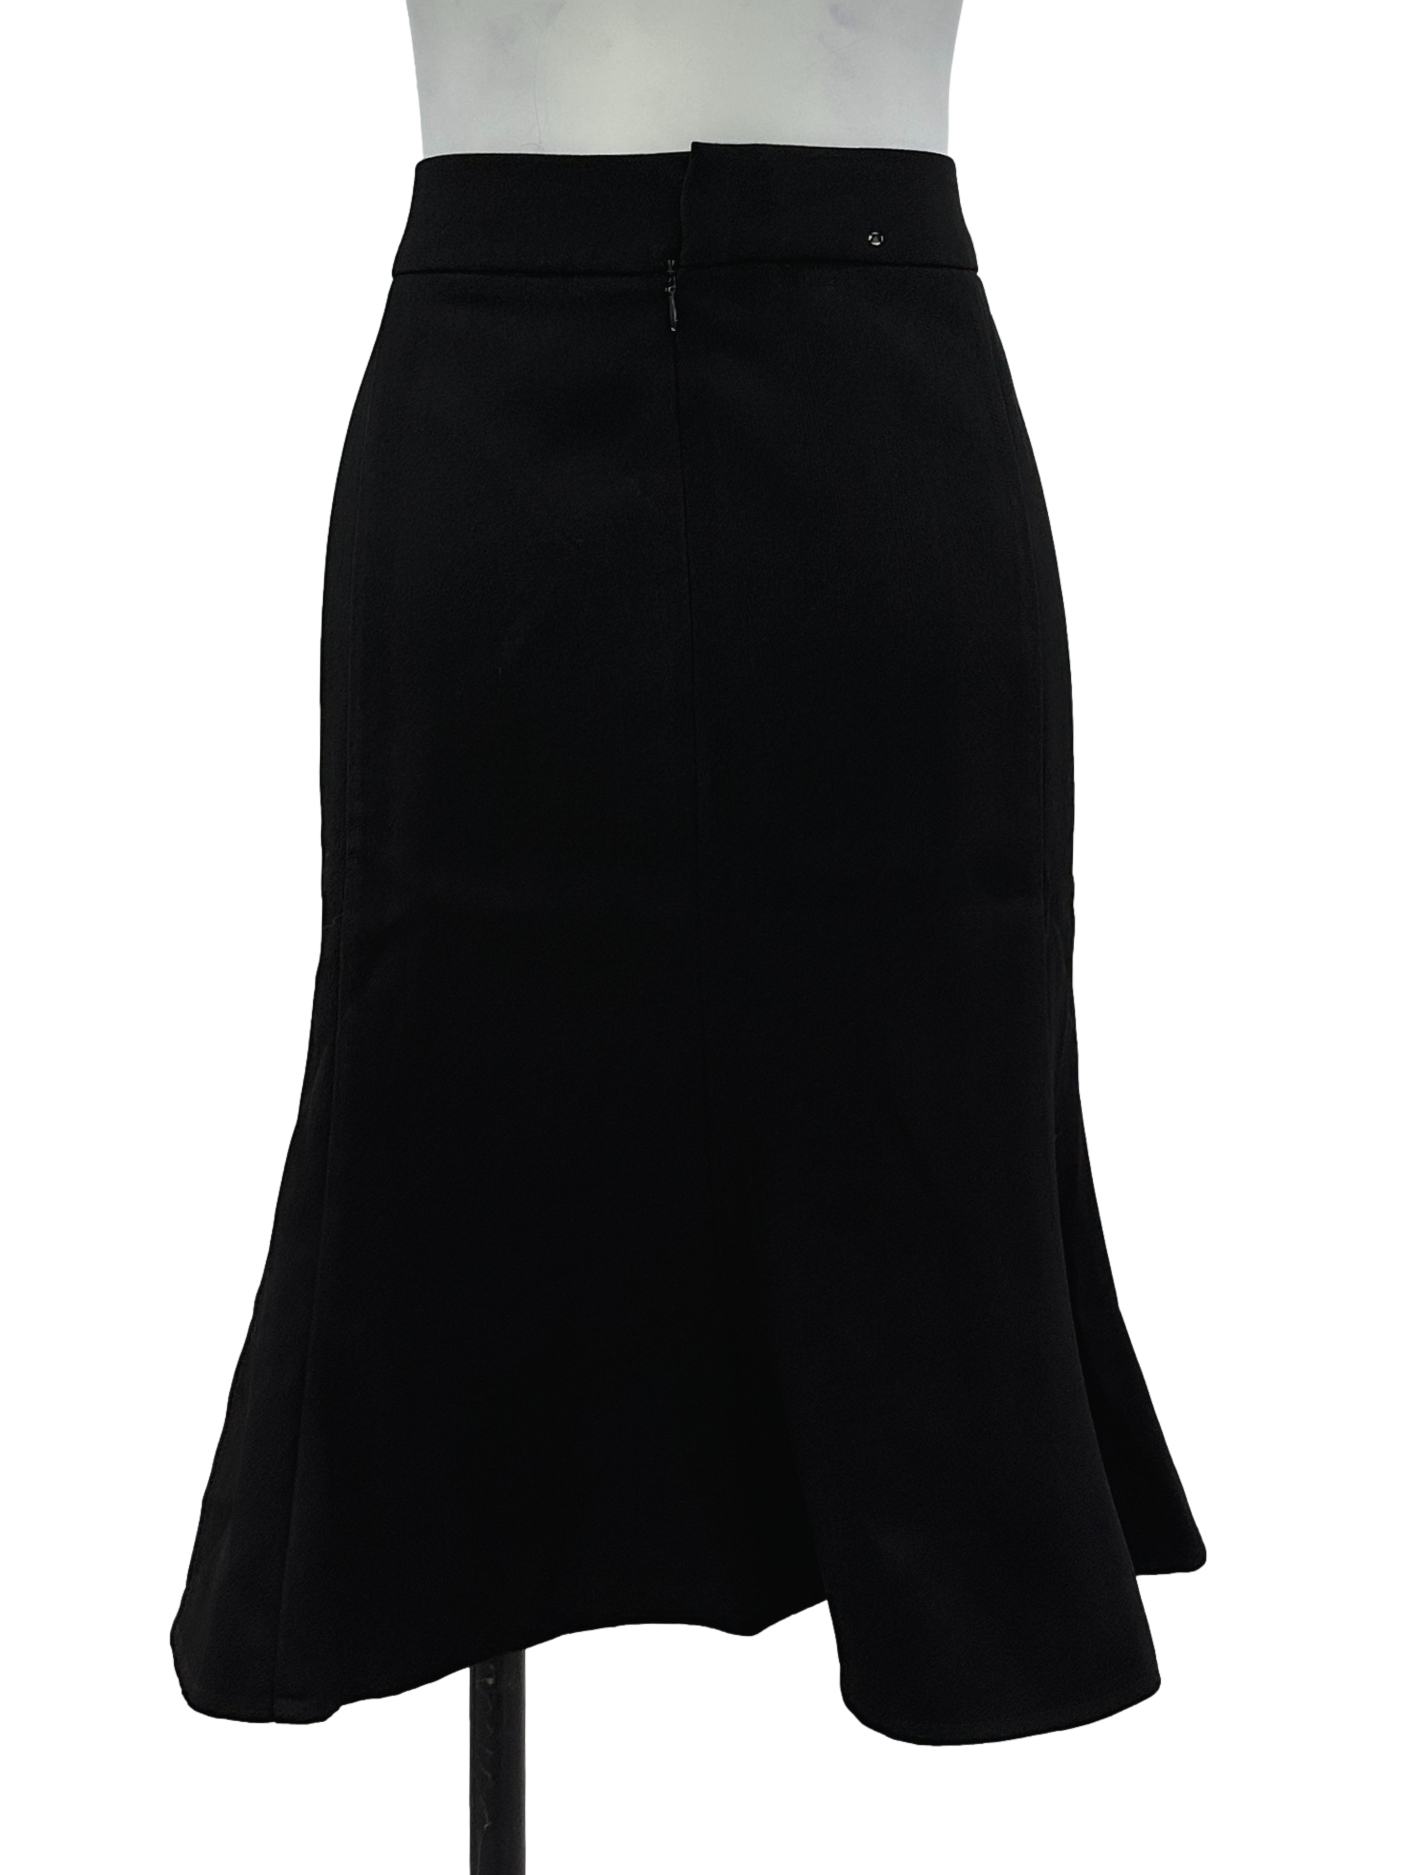 Black Bias Cut Skirt